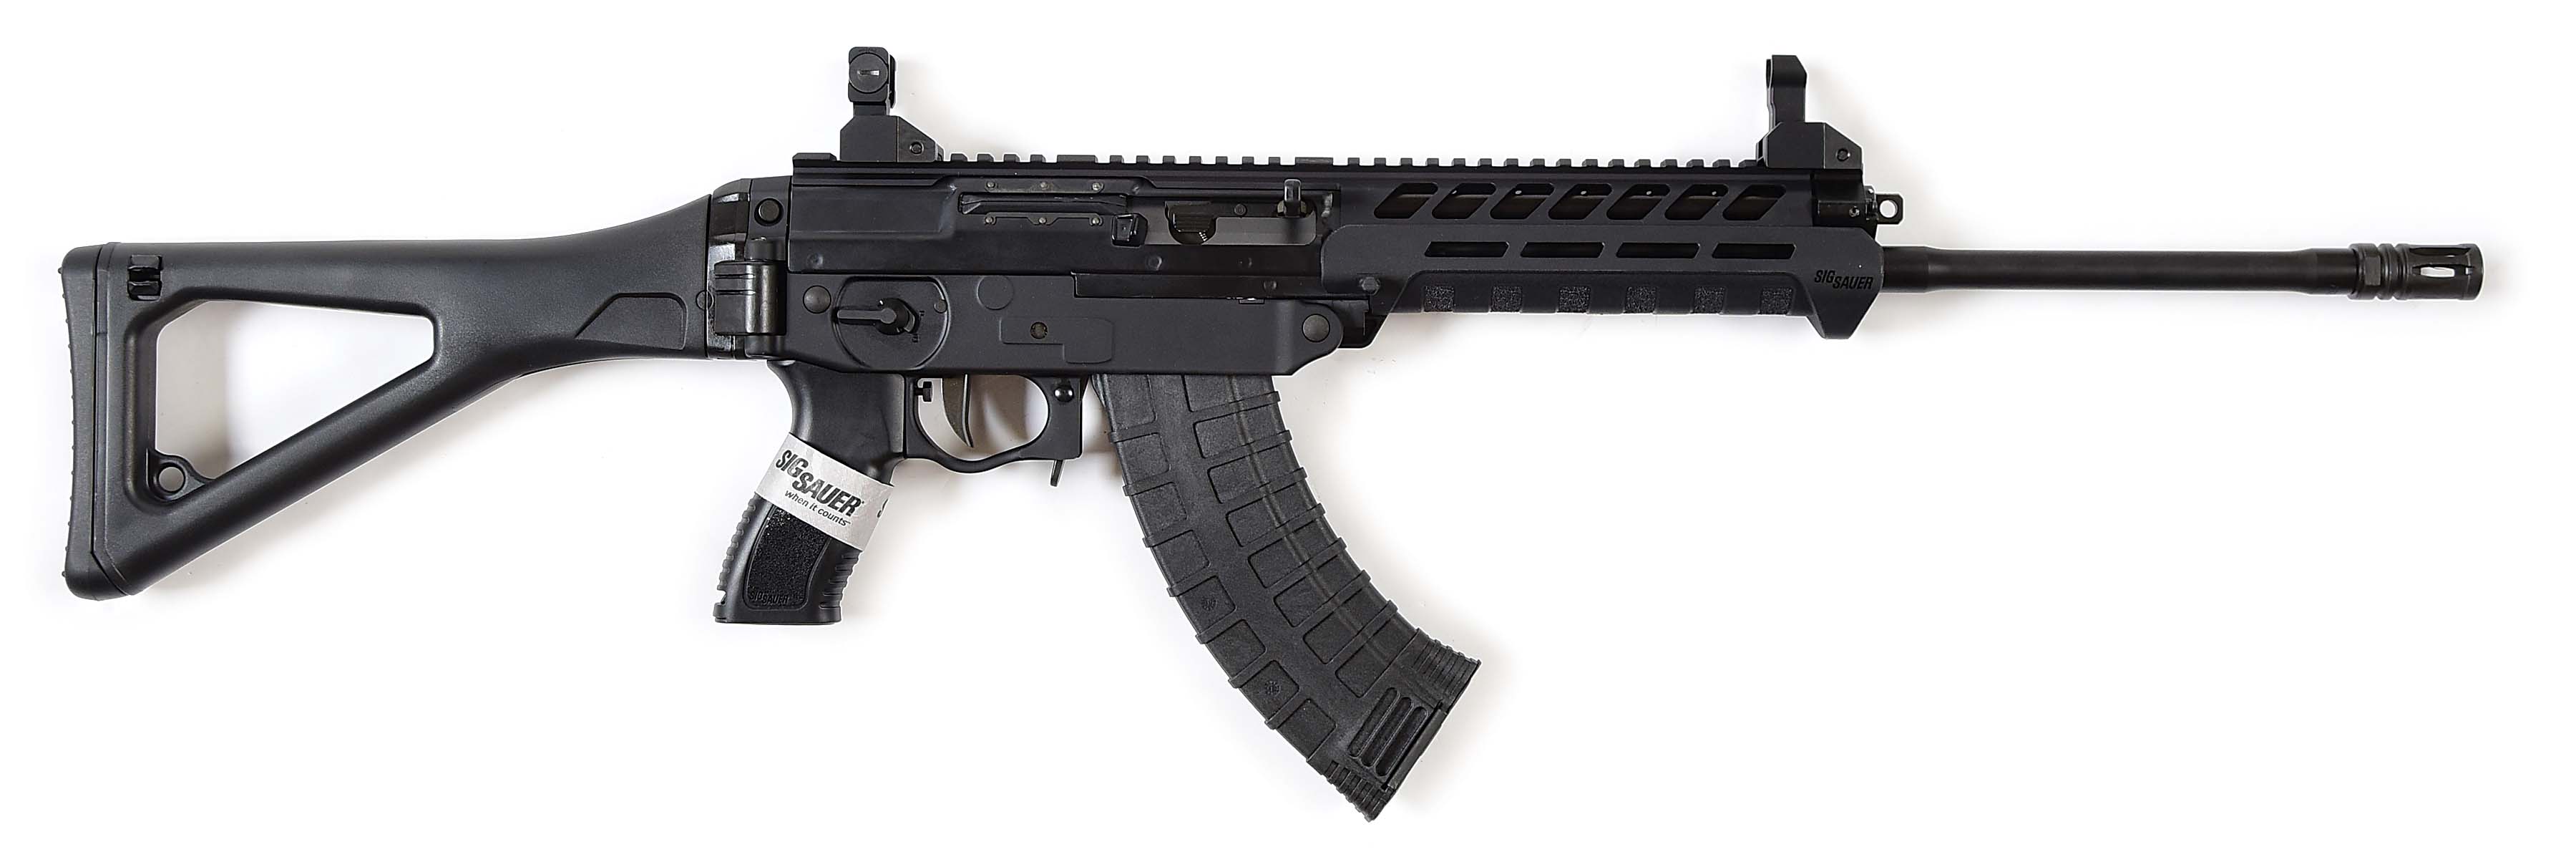 M) SIG sauer SIG-556XI semi-automatic rifle. 